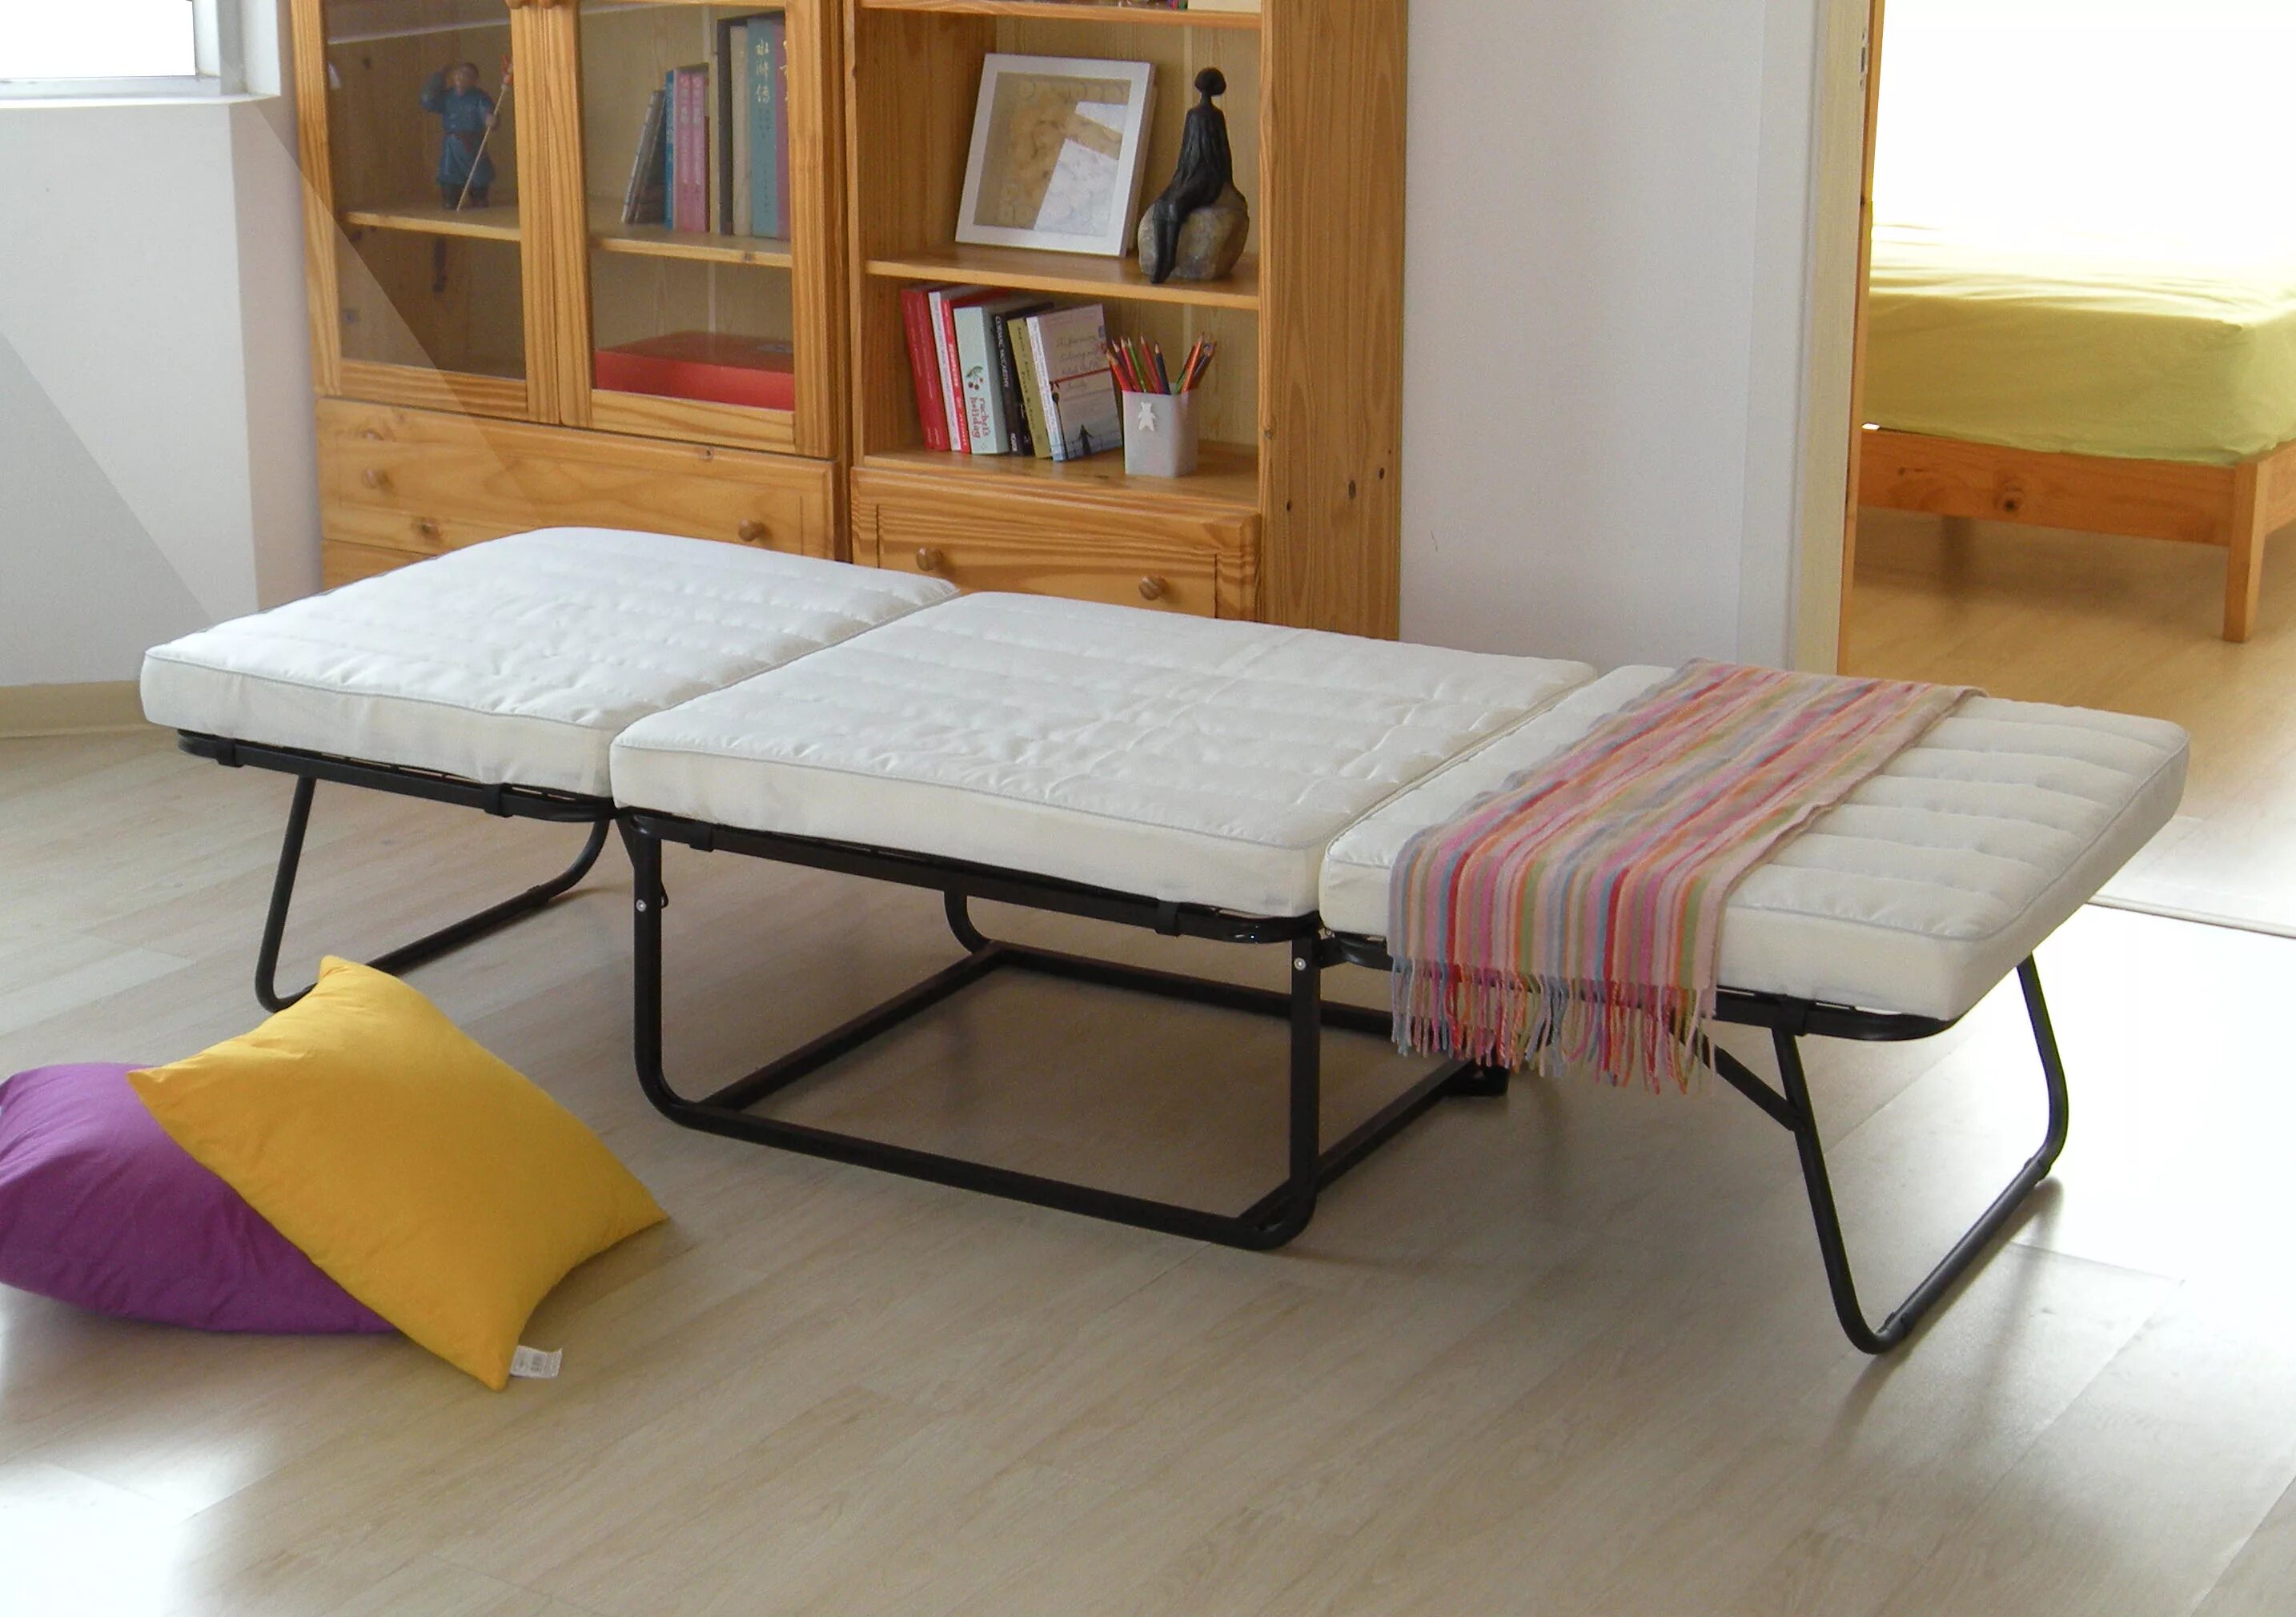 Еврораскладушка фото. Ikea кровать раскладушка. Ikea Folding Bed. Кровать раскладушка икеа двуспальная. Раскладушка двуспальная икеа.